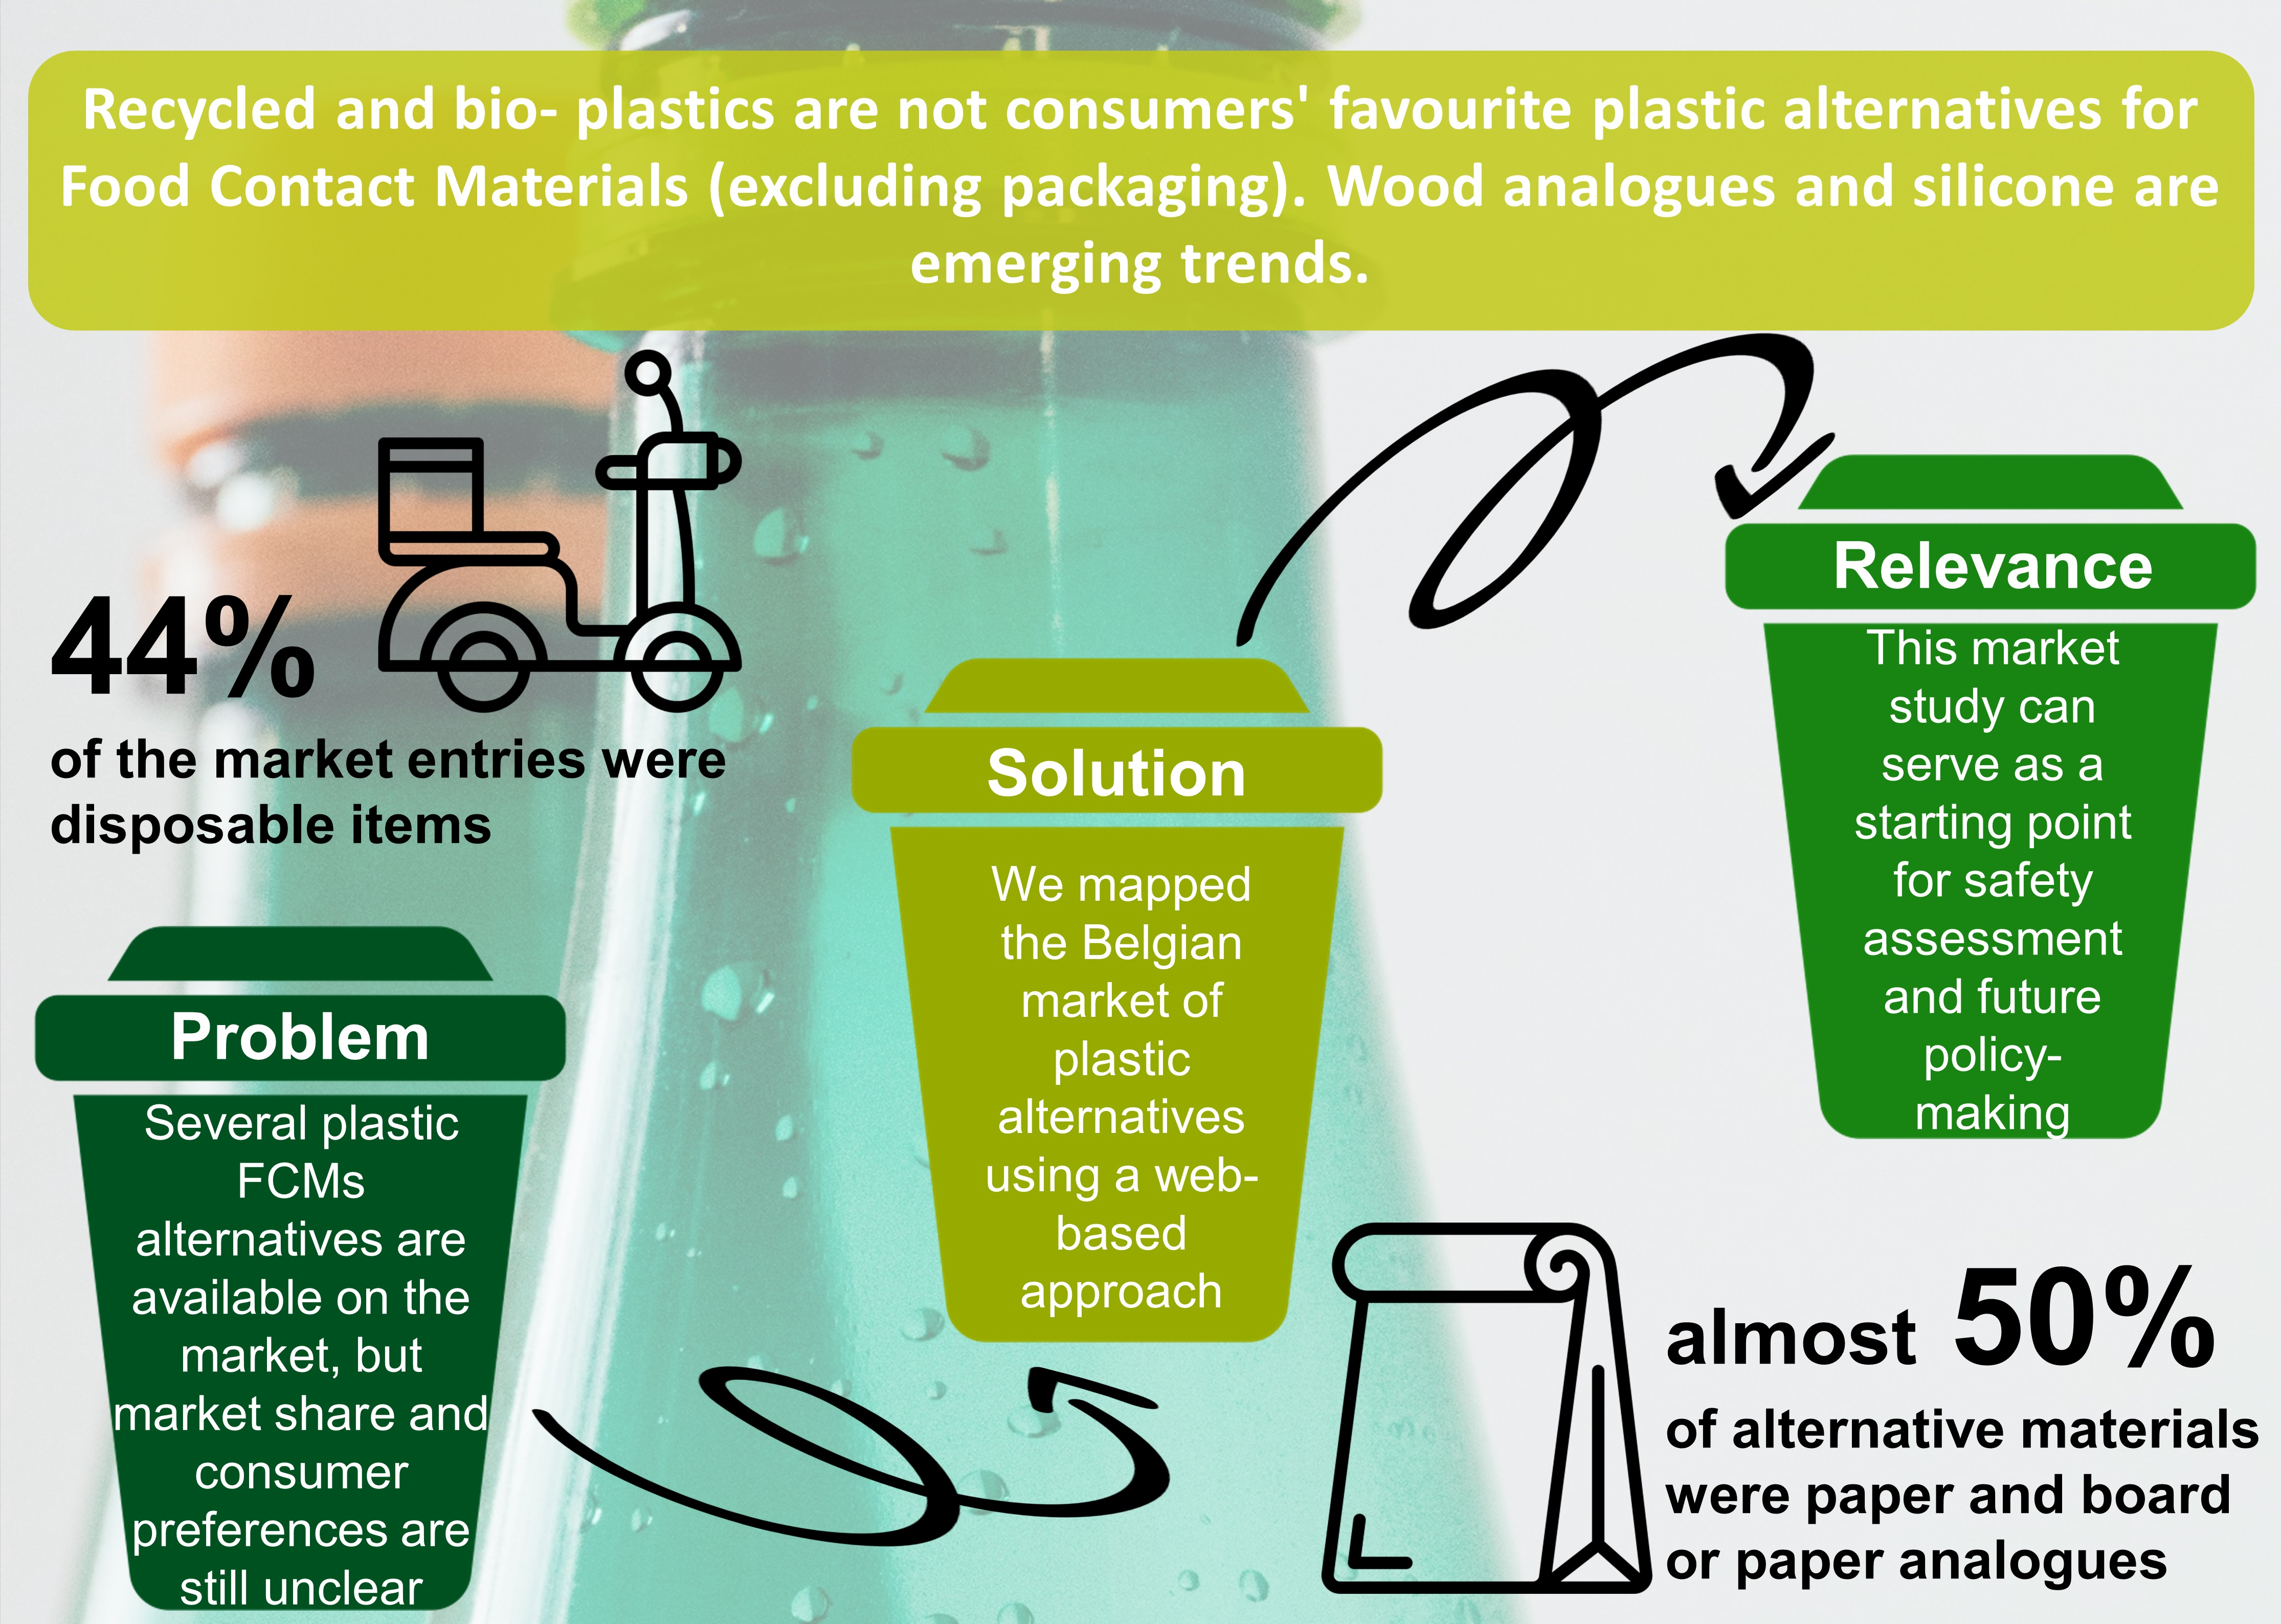 Is Silicone a Safe Alternative to Single-Use Plastics?